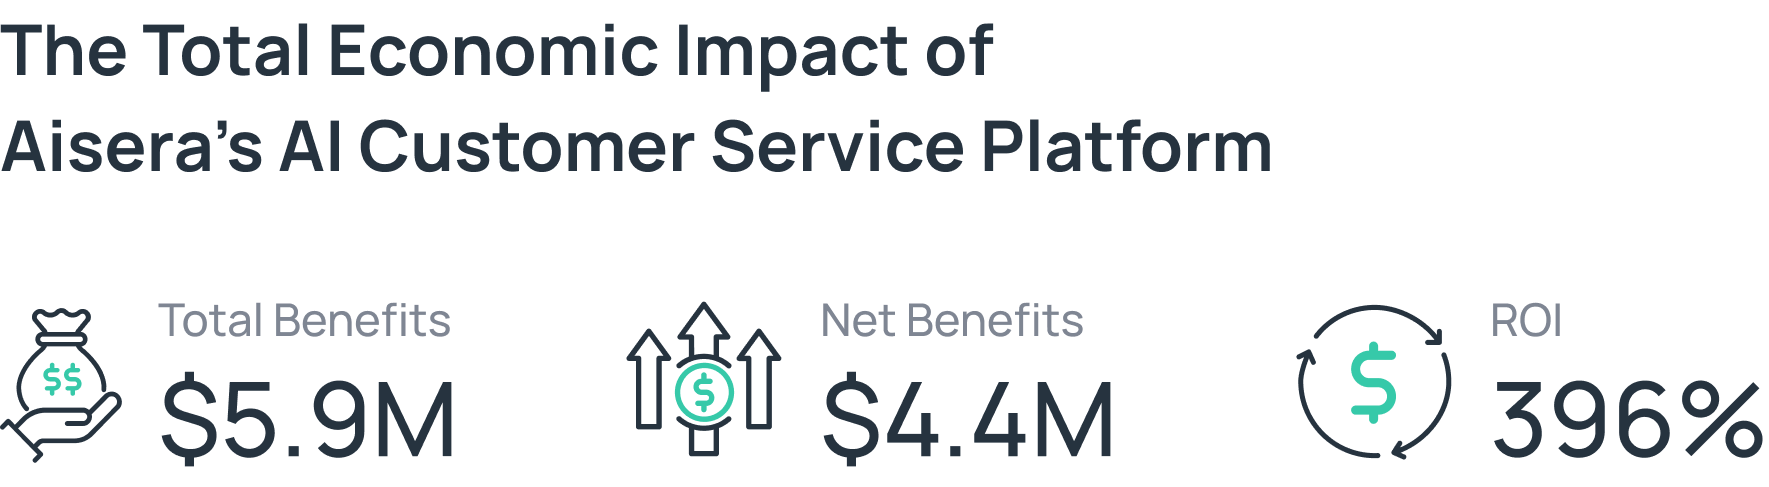 Economic impact of AI Sustomer Service